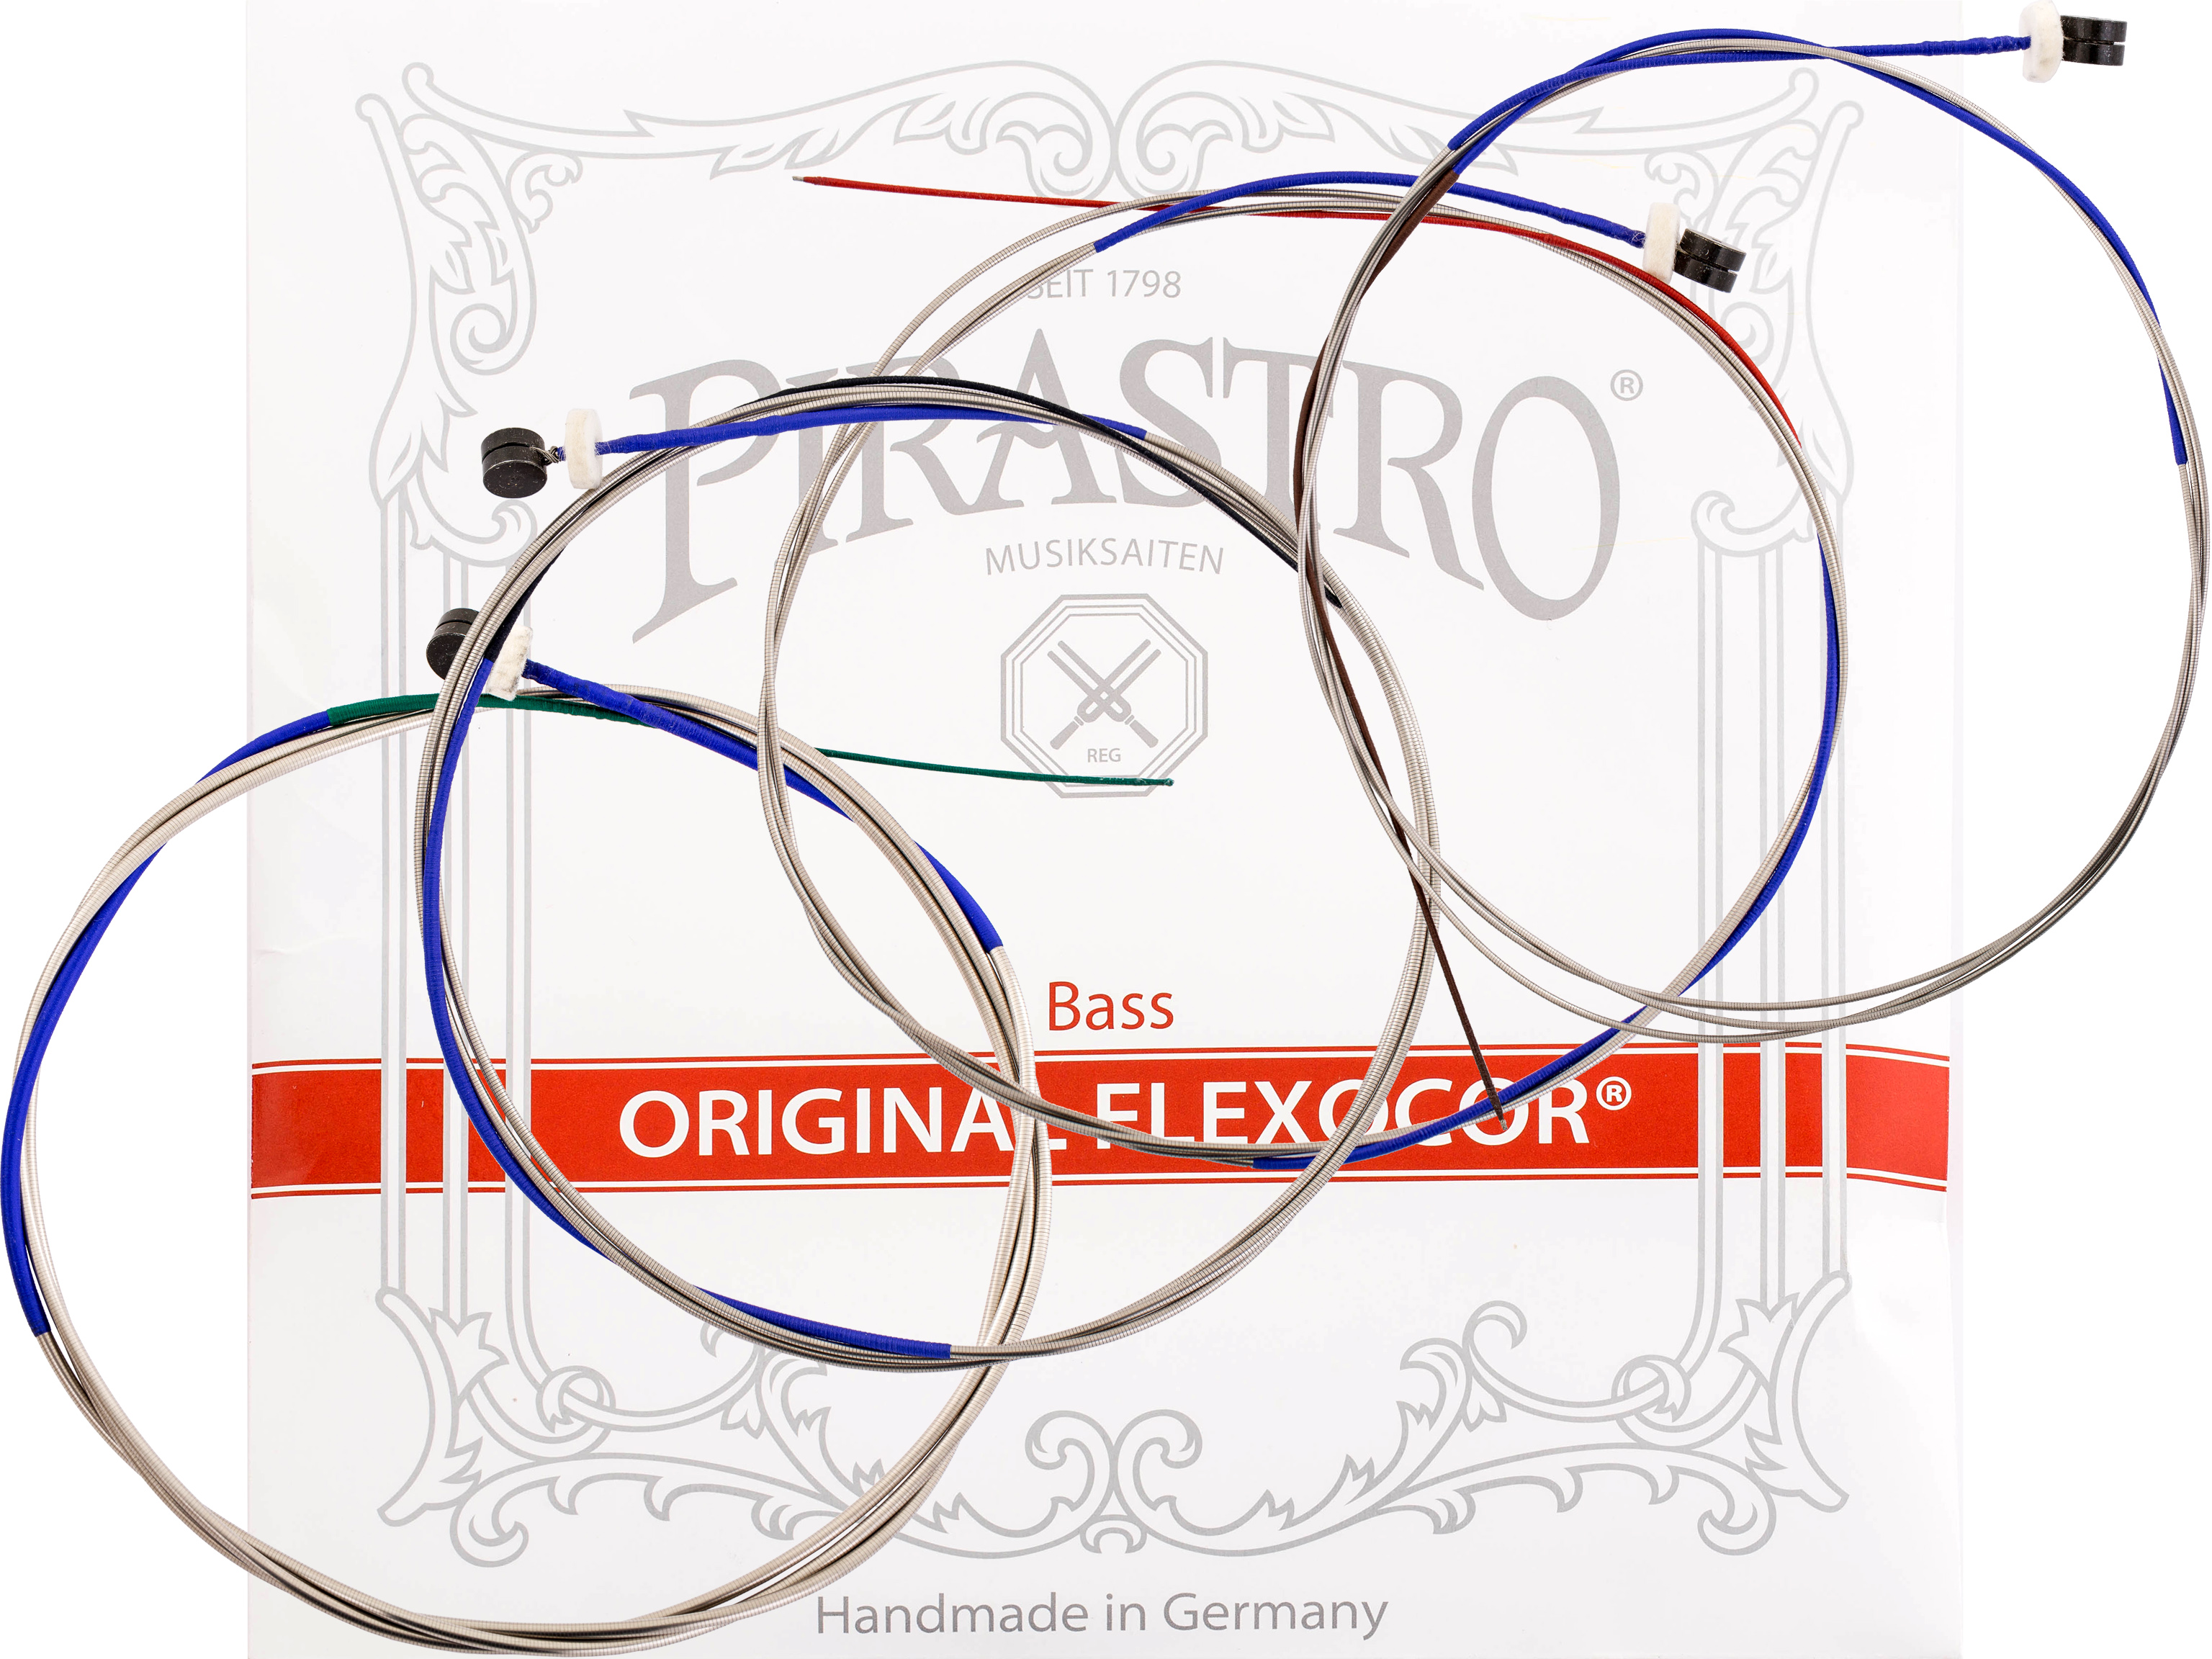 Pirastro 346020 Basssaitensatz 3/4 Original Flexocor